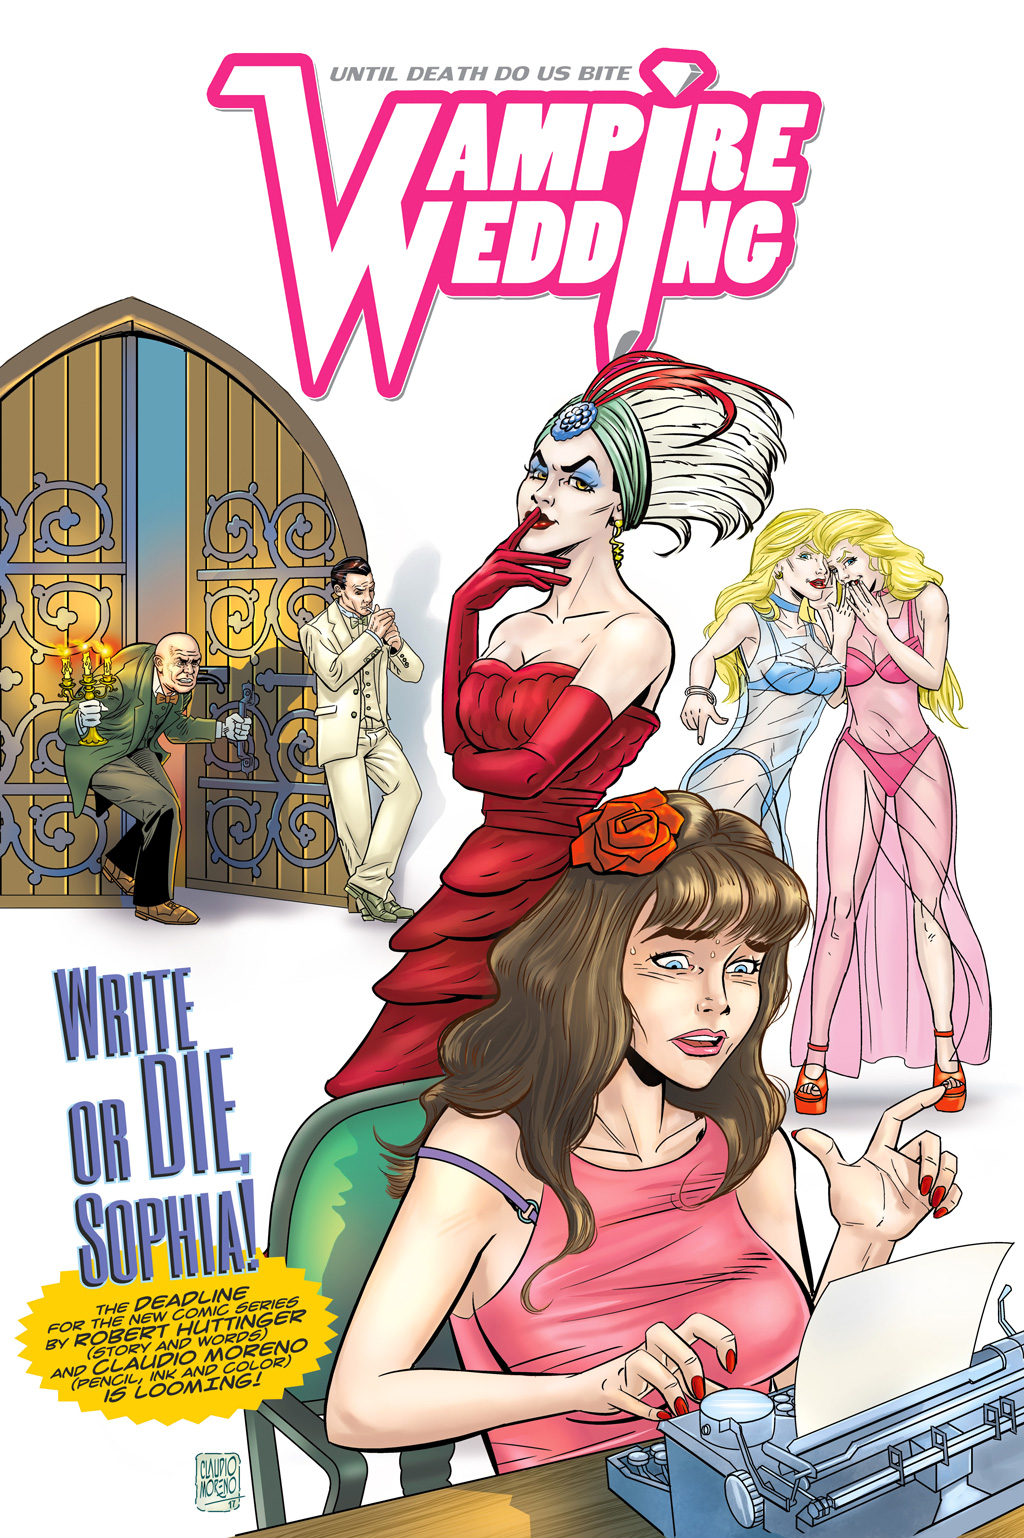 Vampire Wedding new comic series announcement by Robert Huttinger and Claudio Moreno